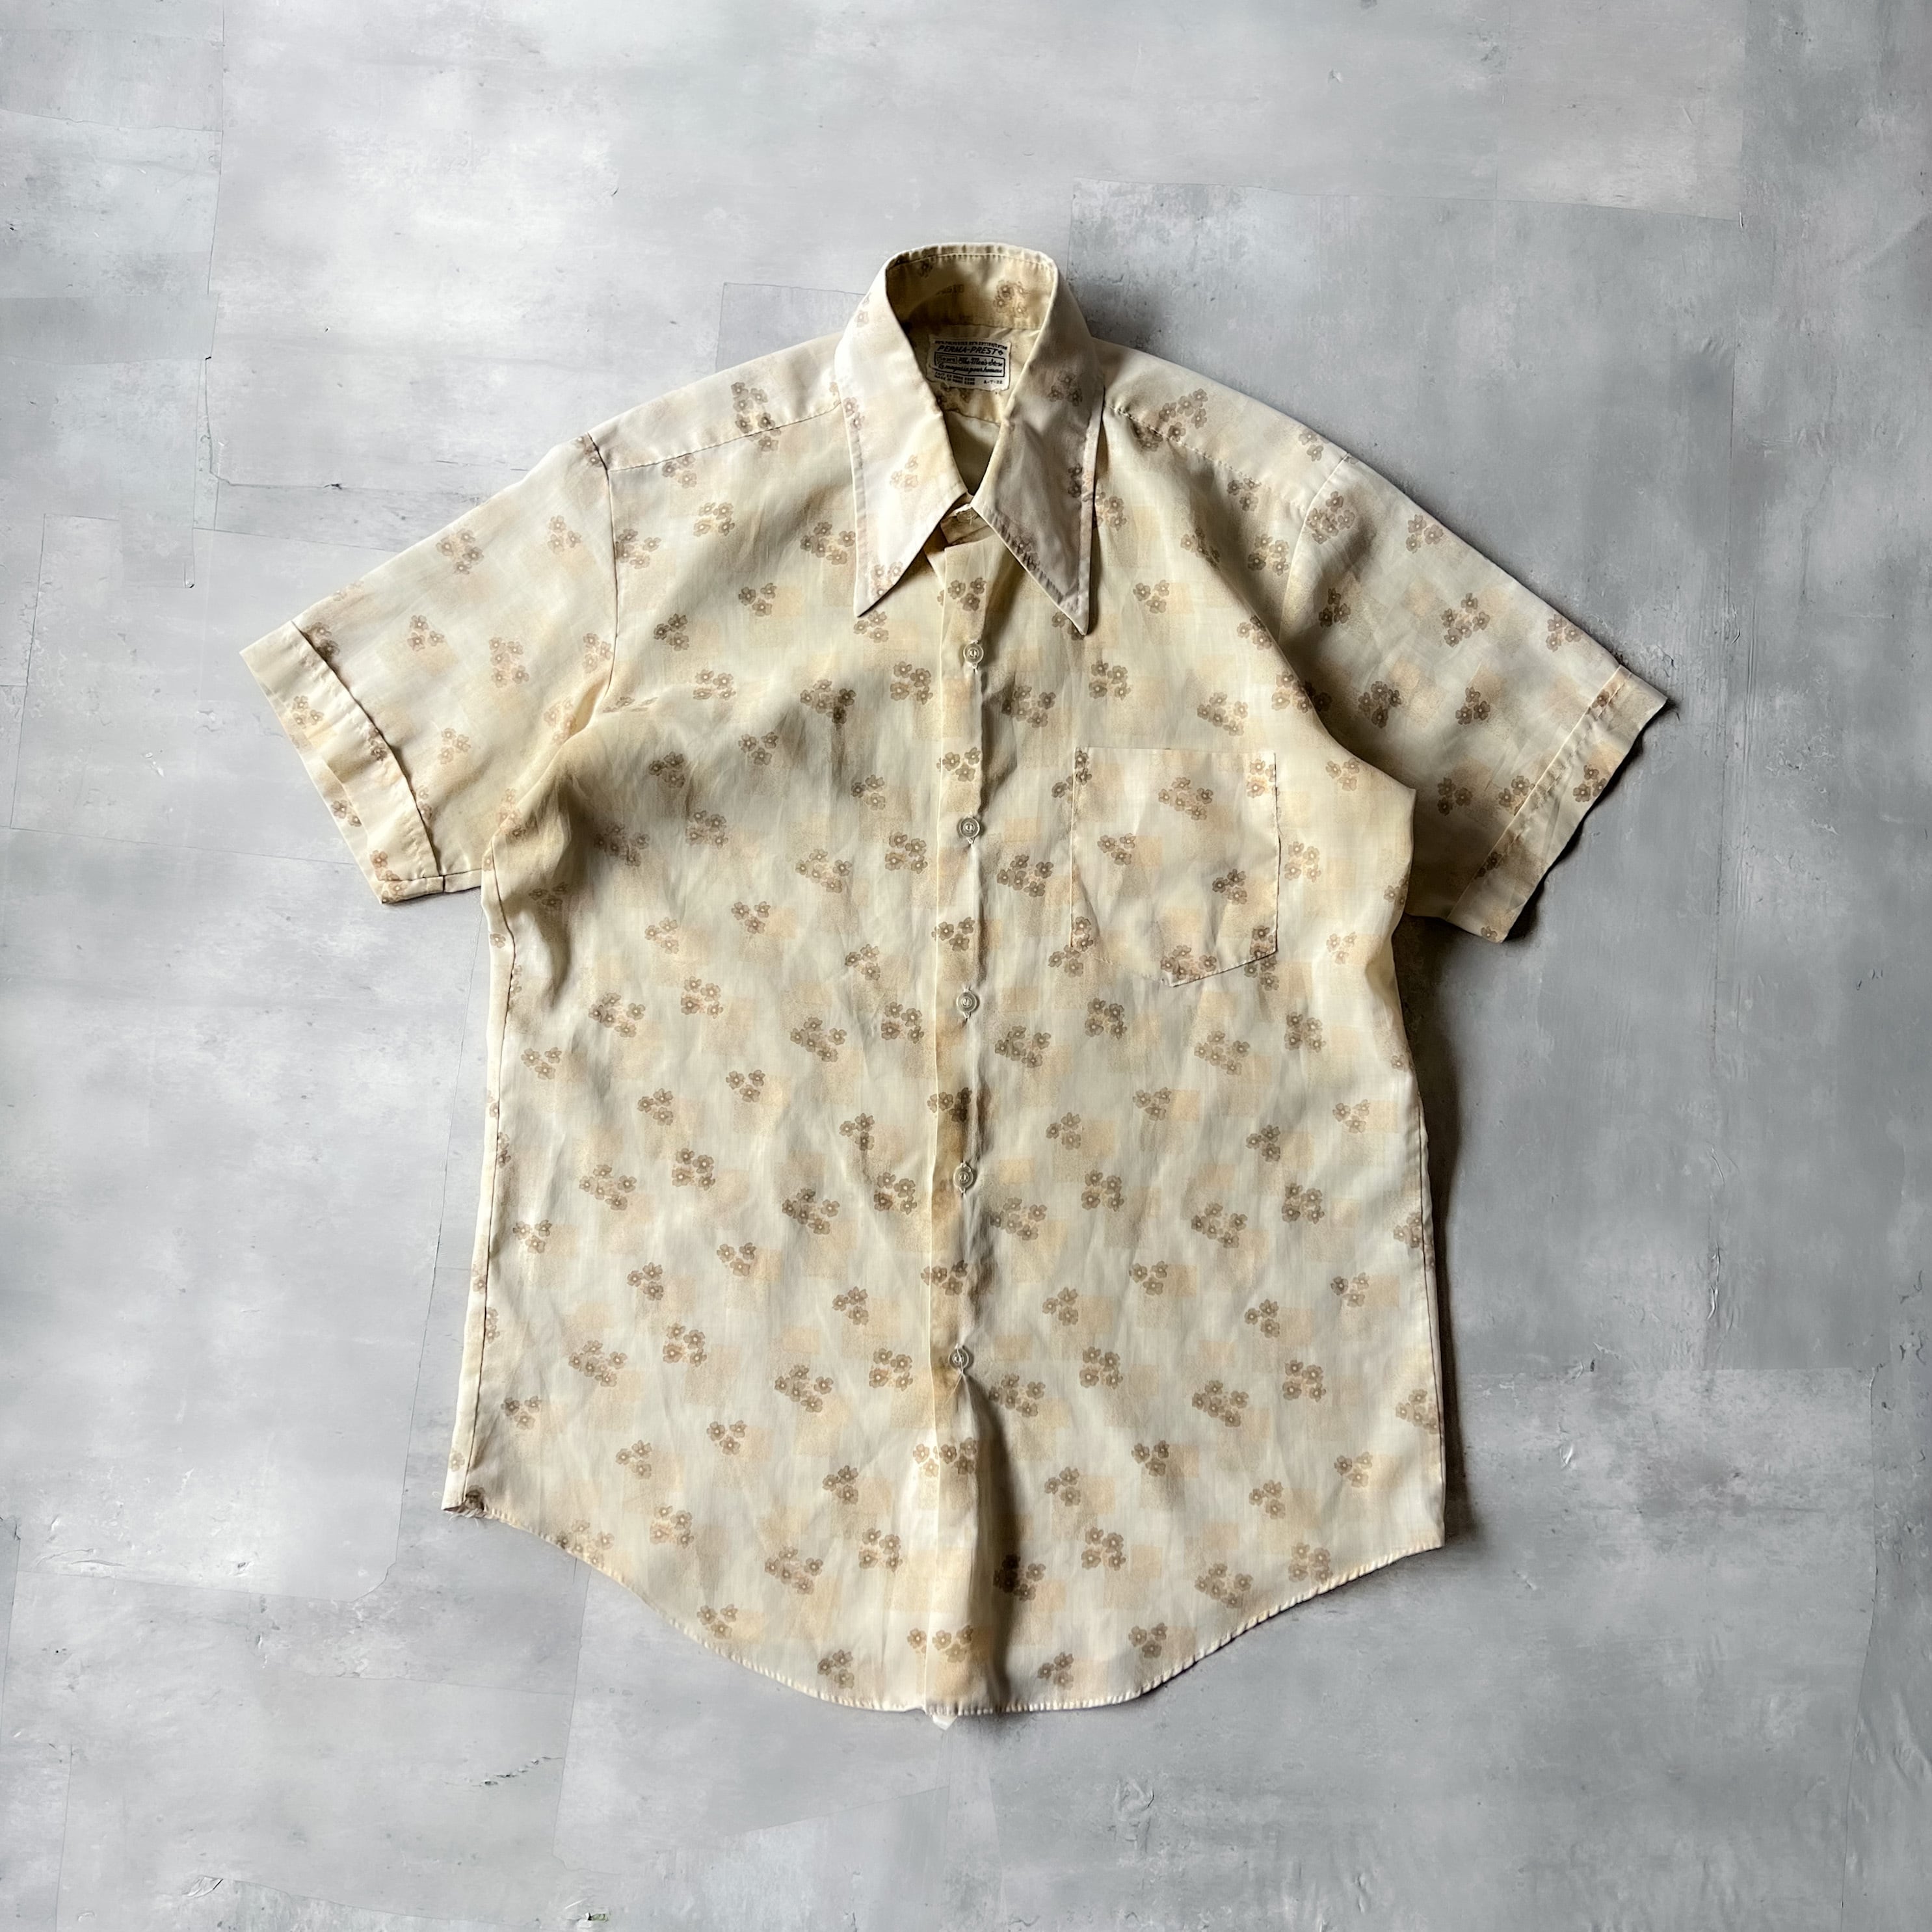 70s “Sears” flower pattern shirt 70年代 シアーズ 花柄 半袖シャツ